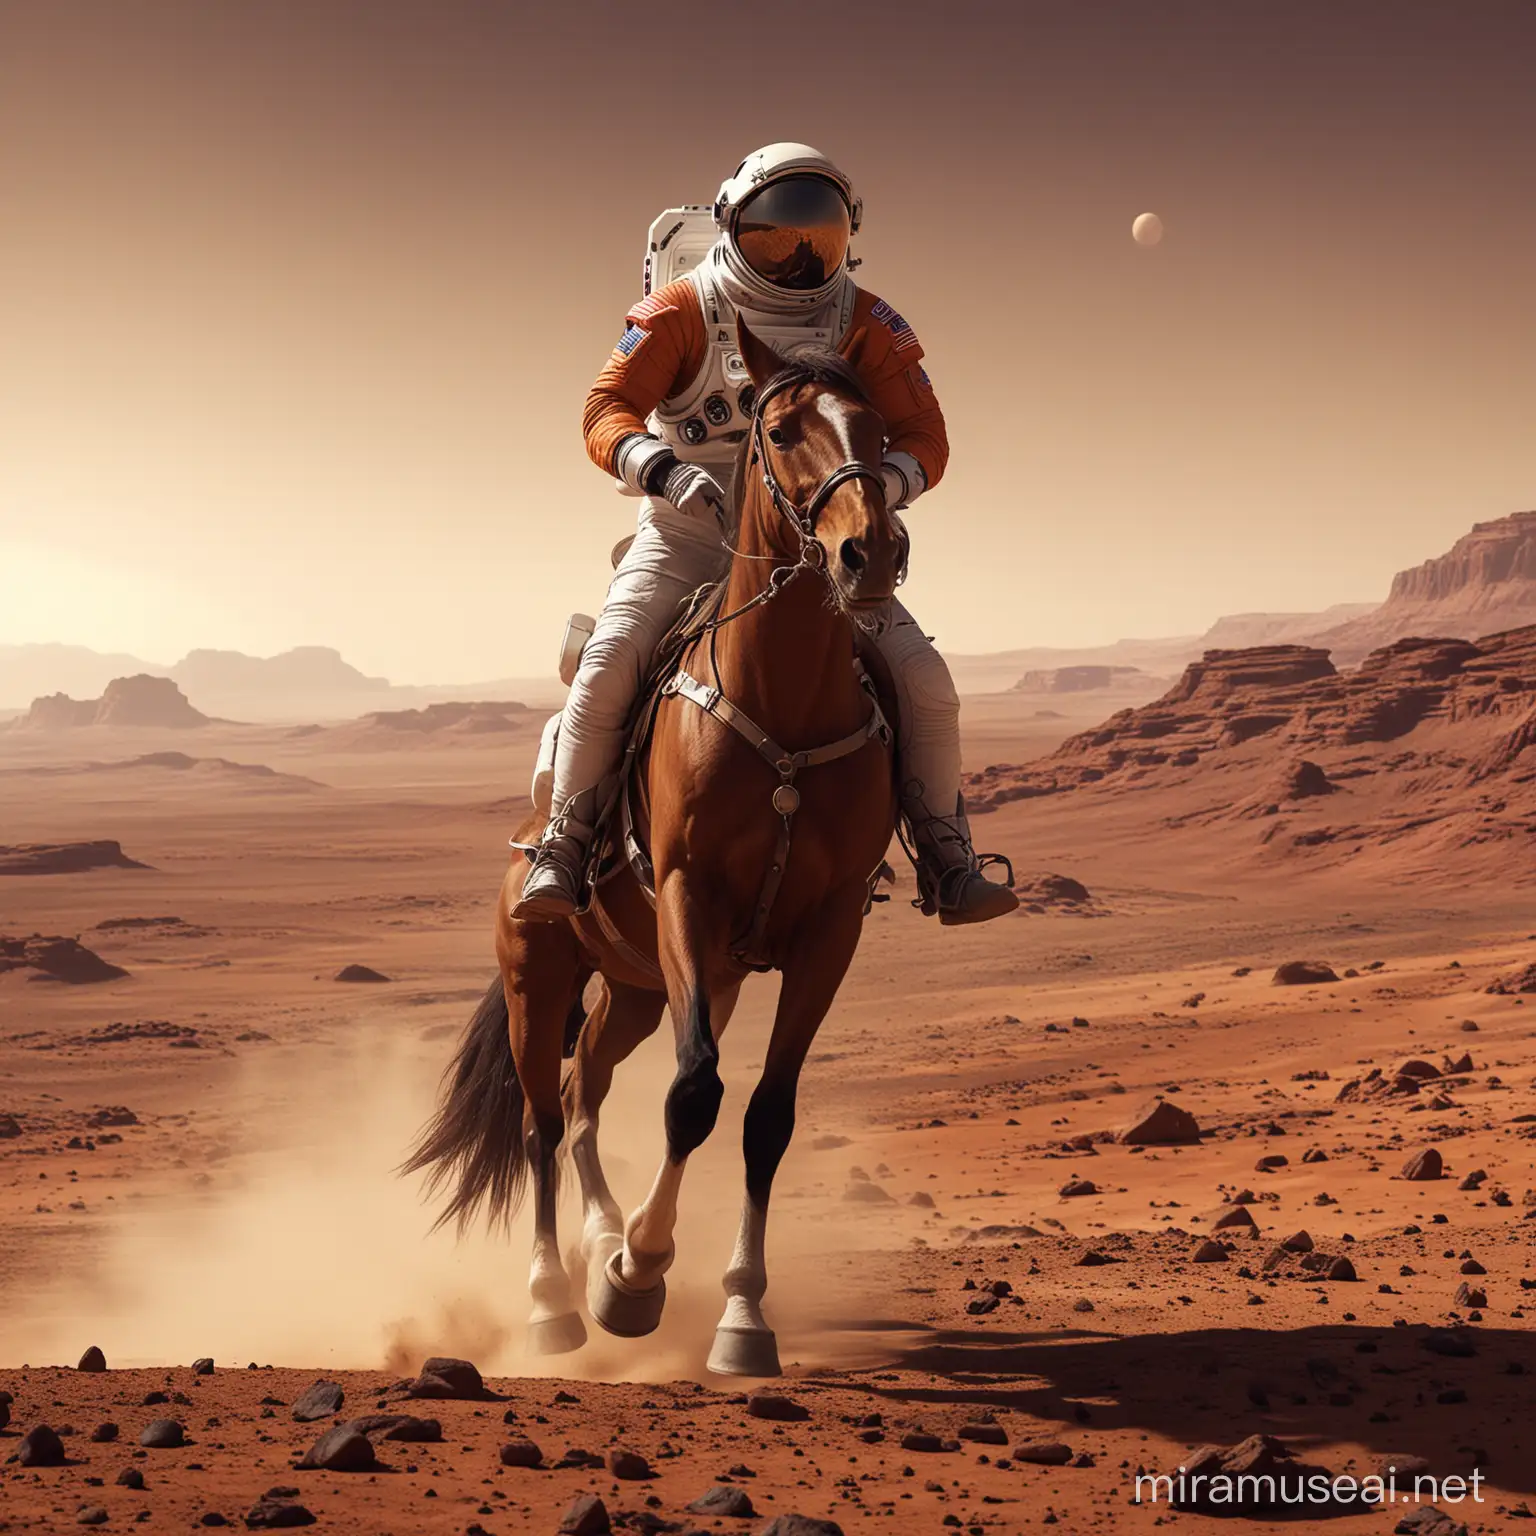 Intergalactic Equestrian Astronaut Horseback Riding on Martian Dunes